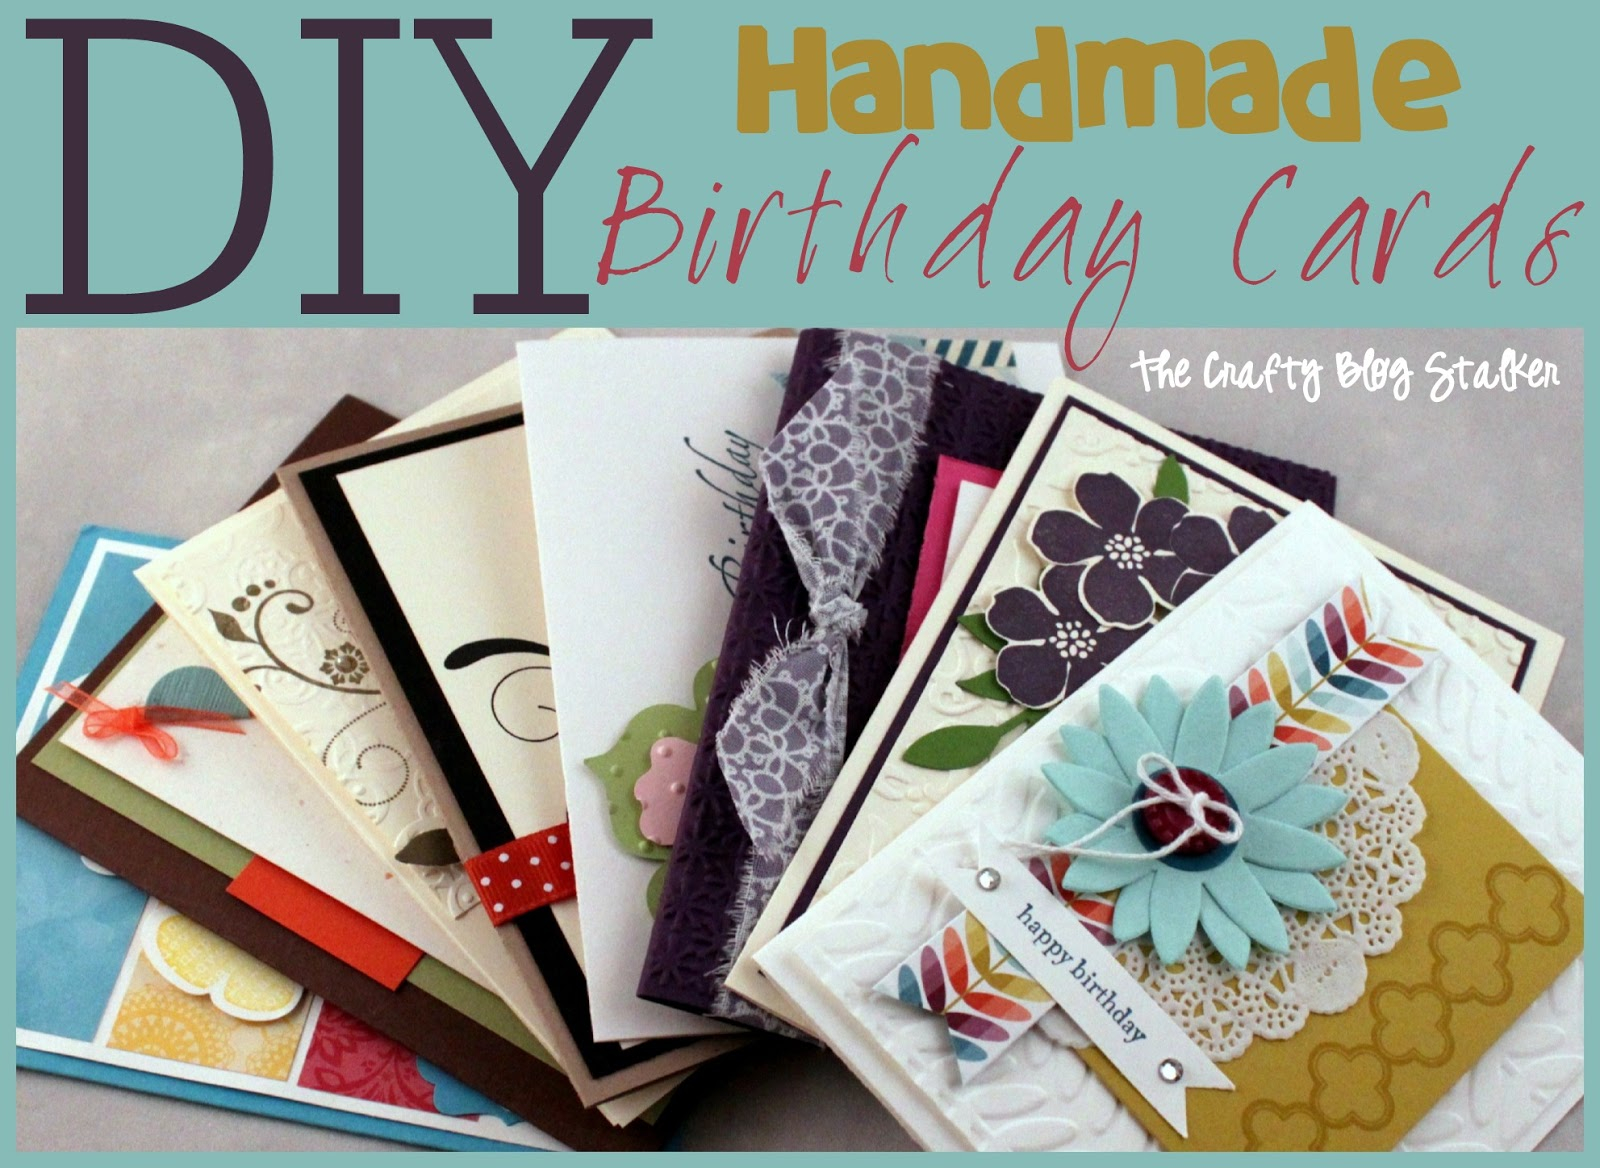 Handmade Birthday Greeting Cards Ideas Handmade Birthday Card Ideas The Crafty Blog Stalker